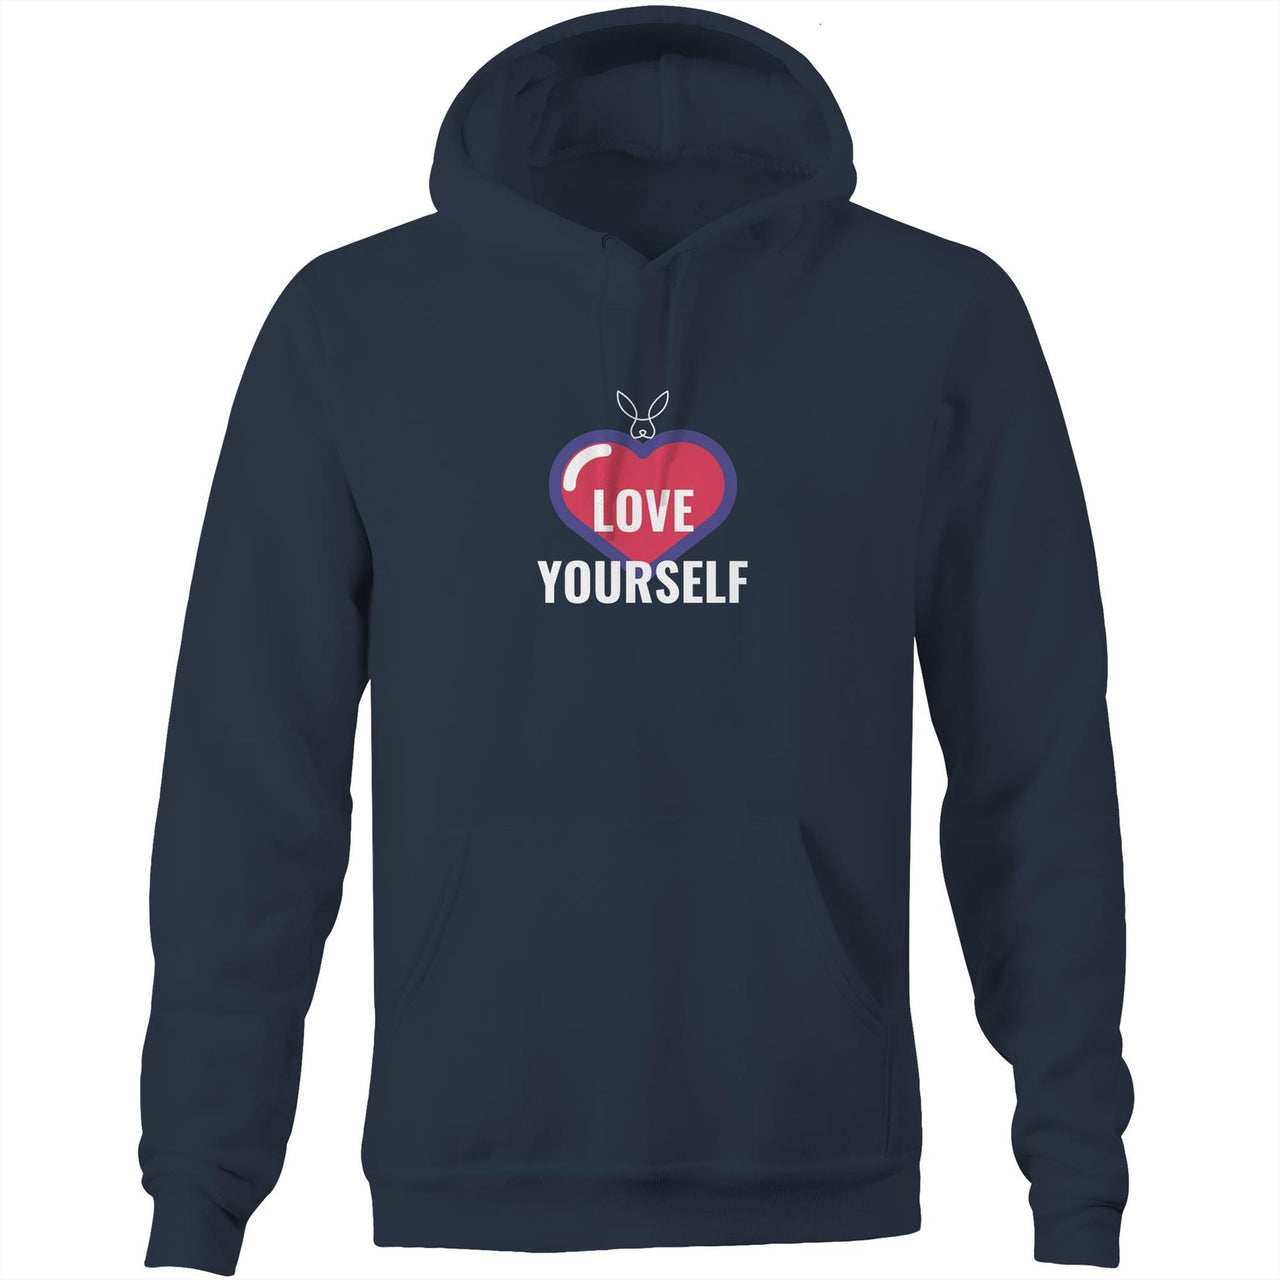 Love Yourself Pocket Hoodie Sweatshirt. unisex mens womens navy